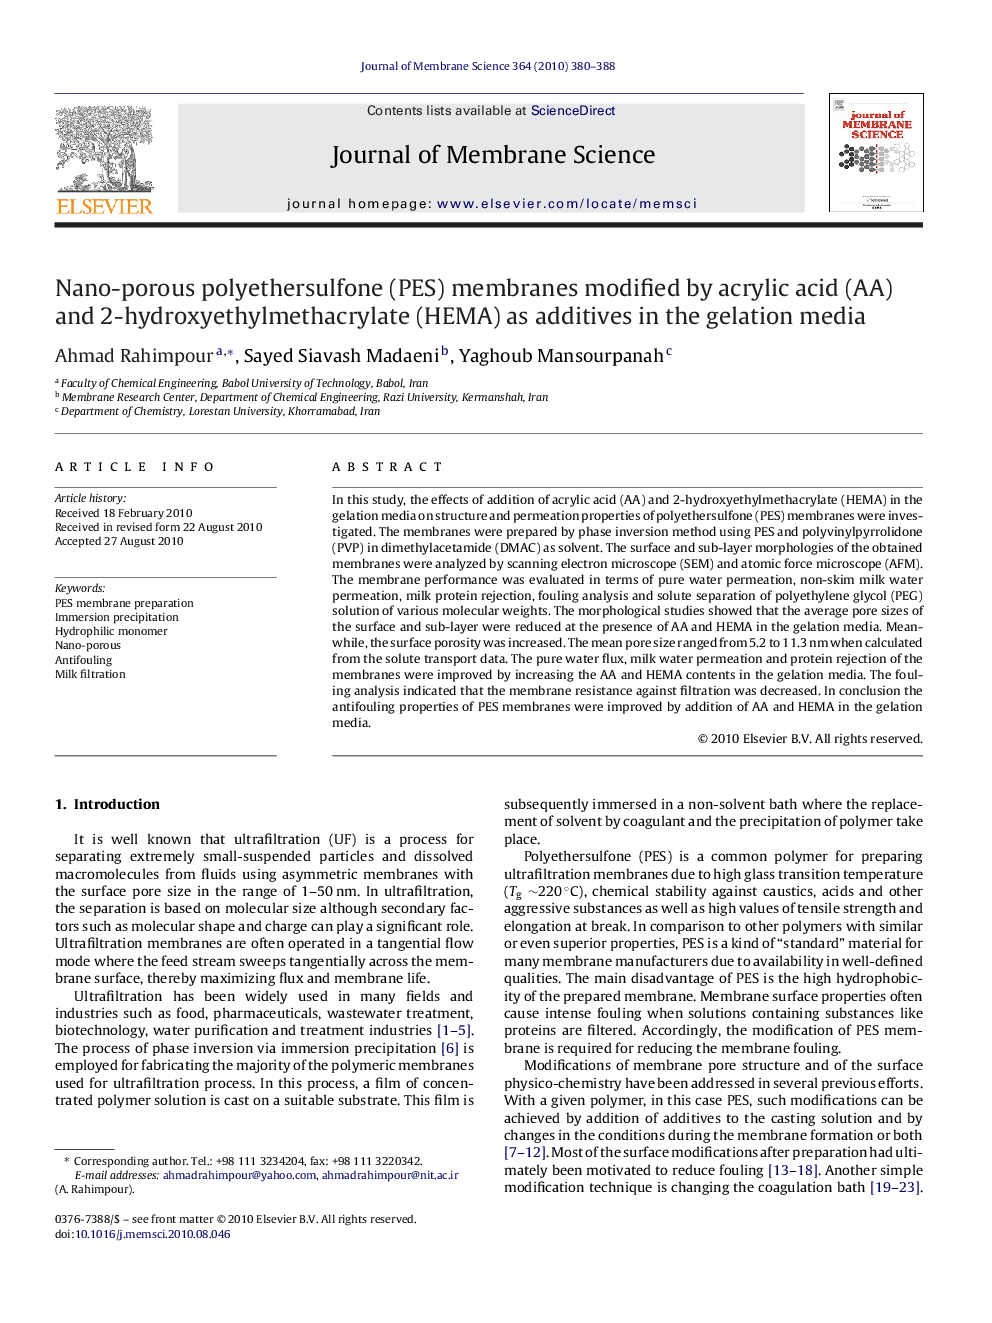 Nano-porous polyethersulfone (PES) membranes modified by acrylic acid (AA) and 2-hydroxyethylmethacrylate (HEMA) as additives in the gelation media